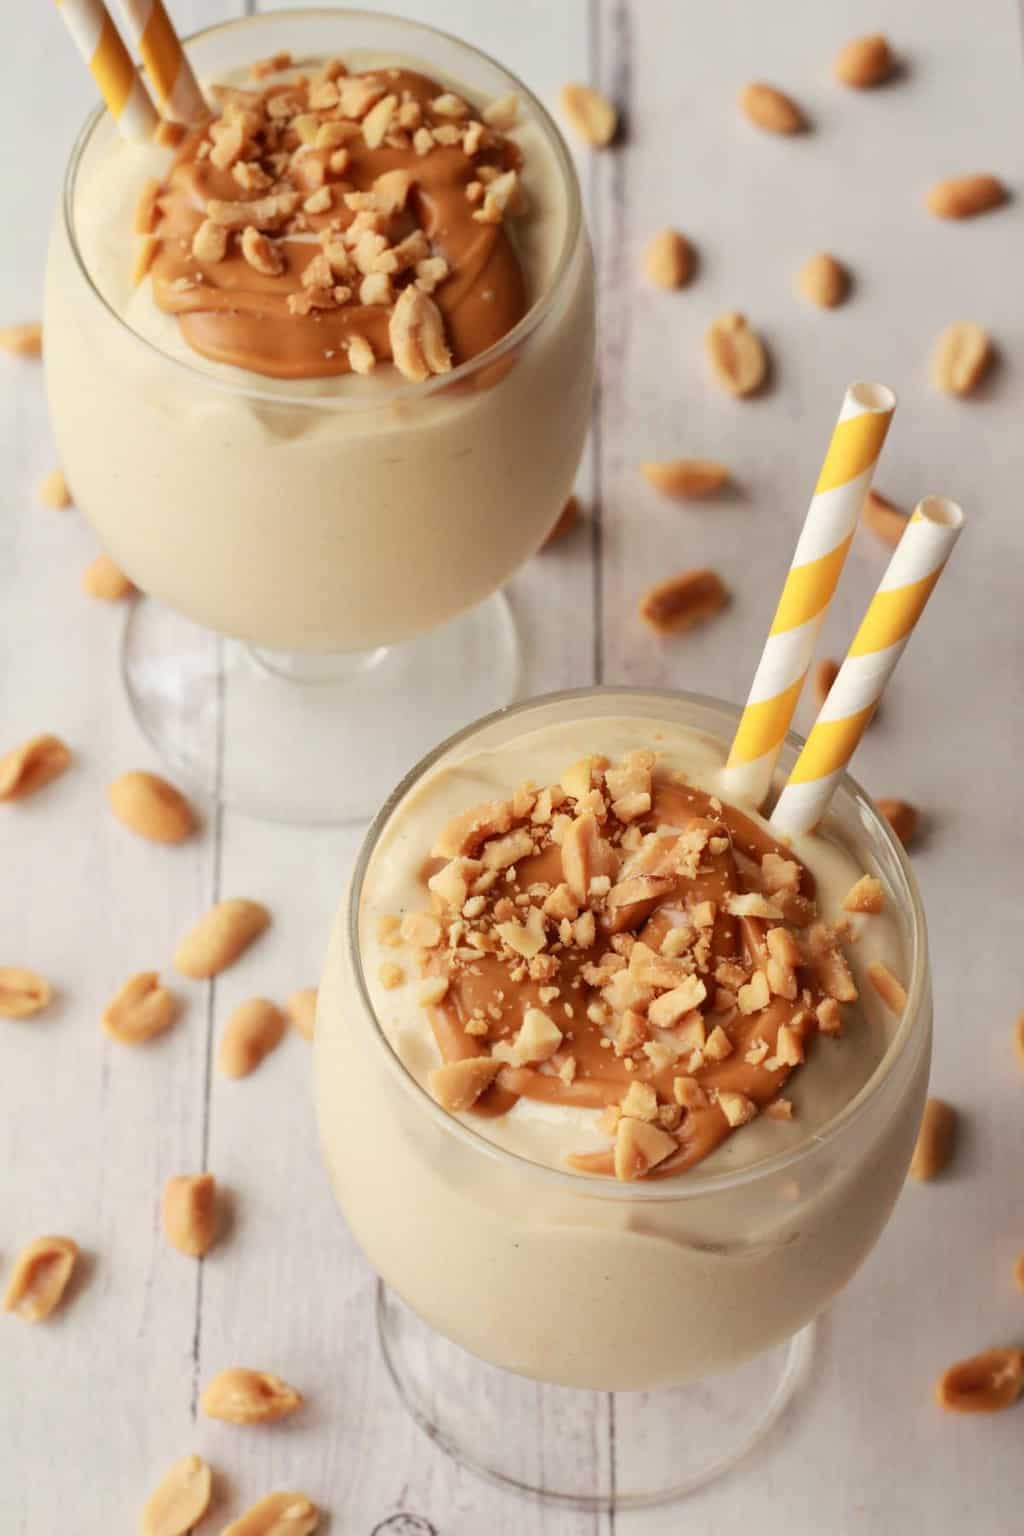 Double-Thick and Ultra Creamy Vegan Peanut Butter Milkshake #vegan #lovingitvegan #peanutbutter #dairyfree #glutenfree #milkshake #dessert